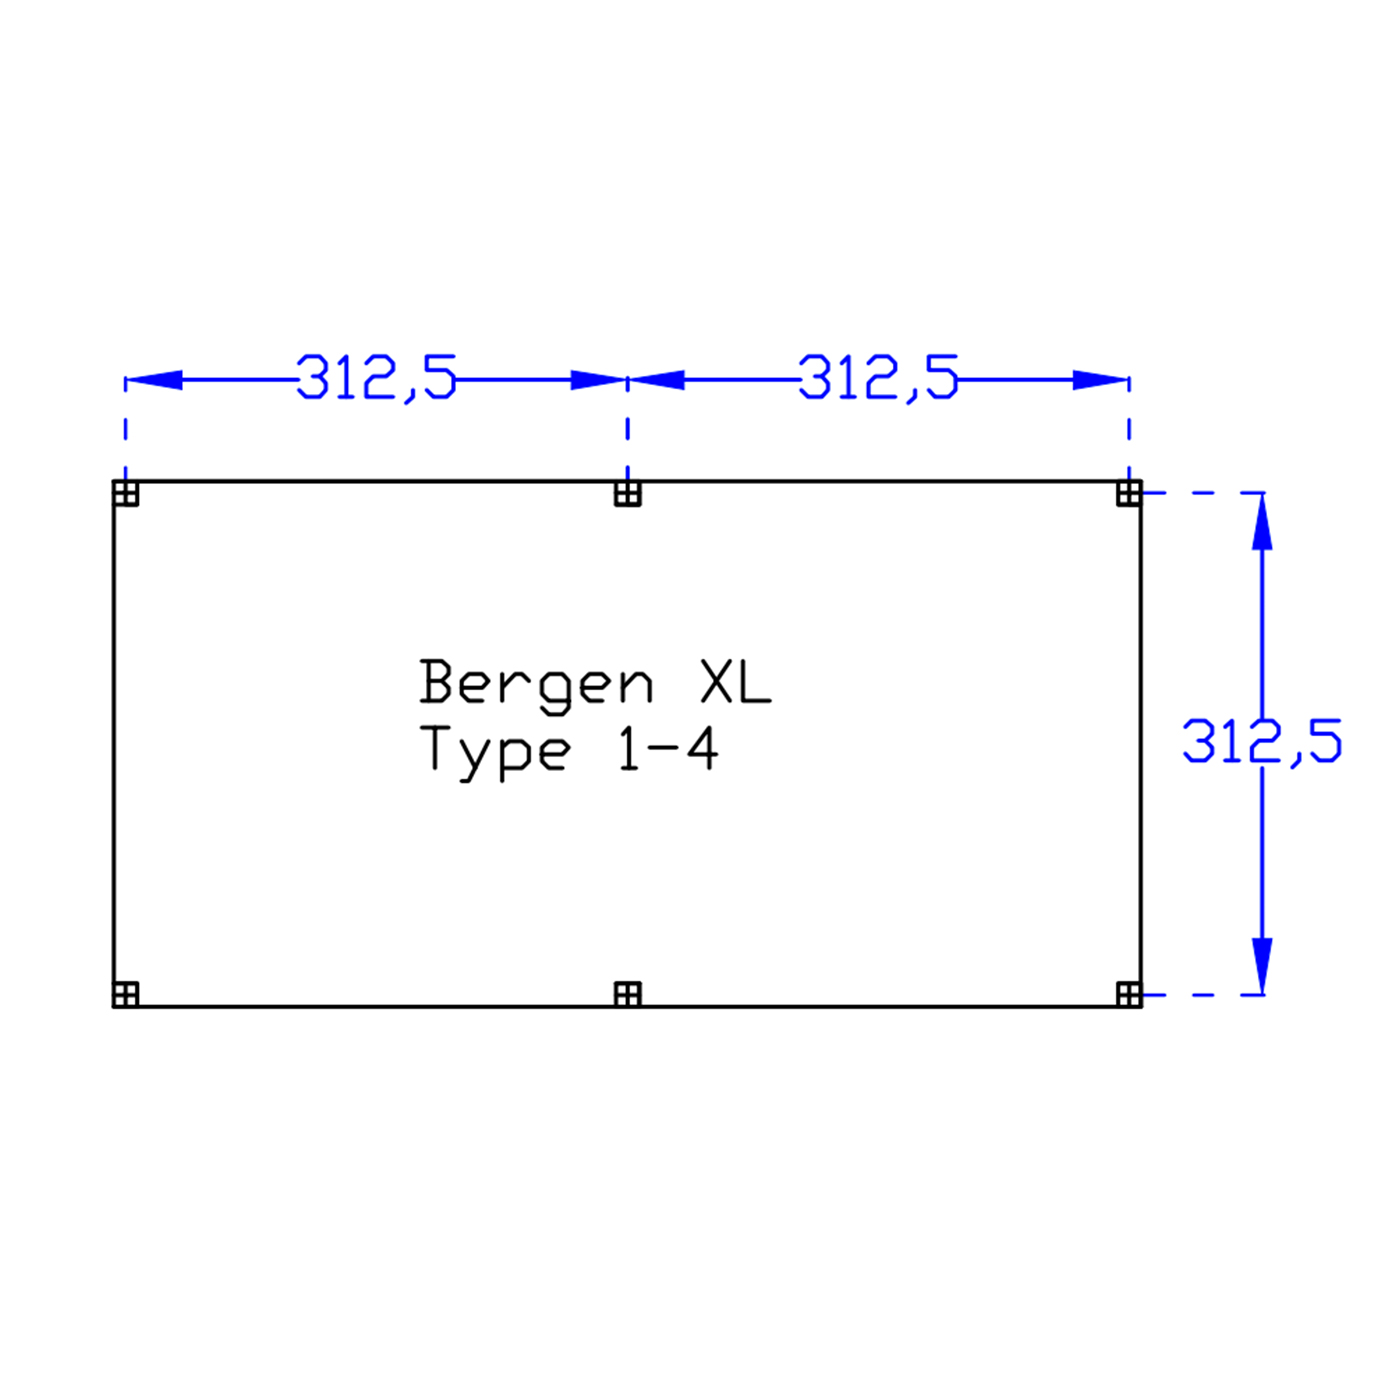 Bergen XL type 1